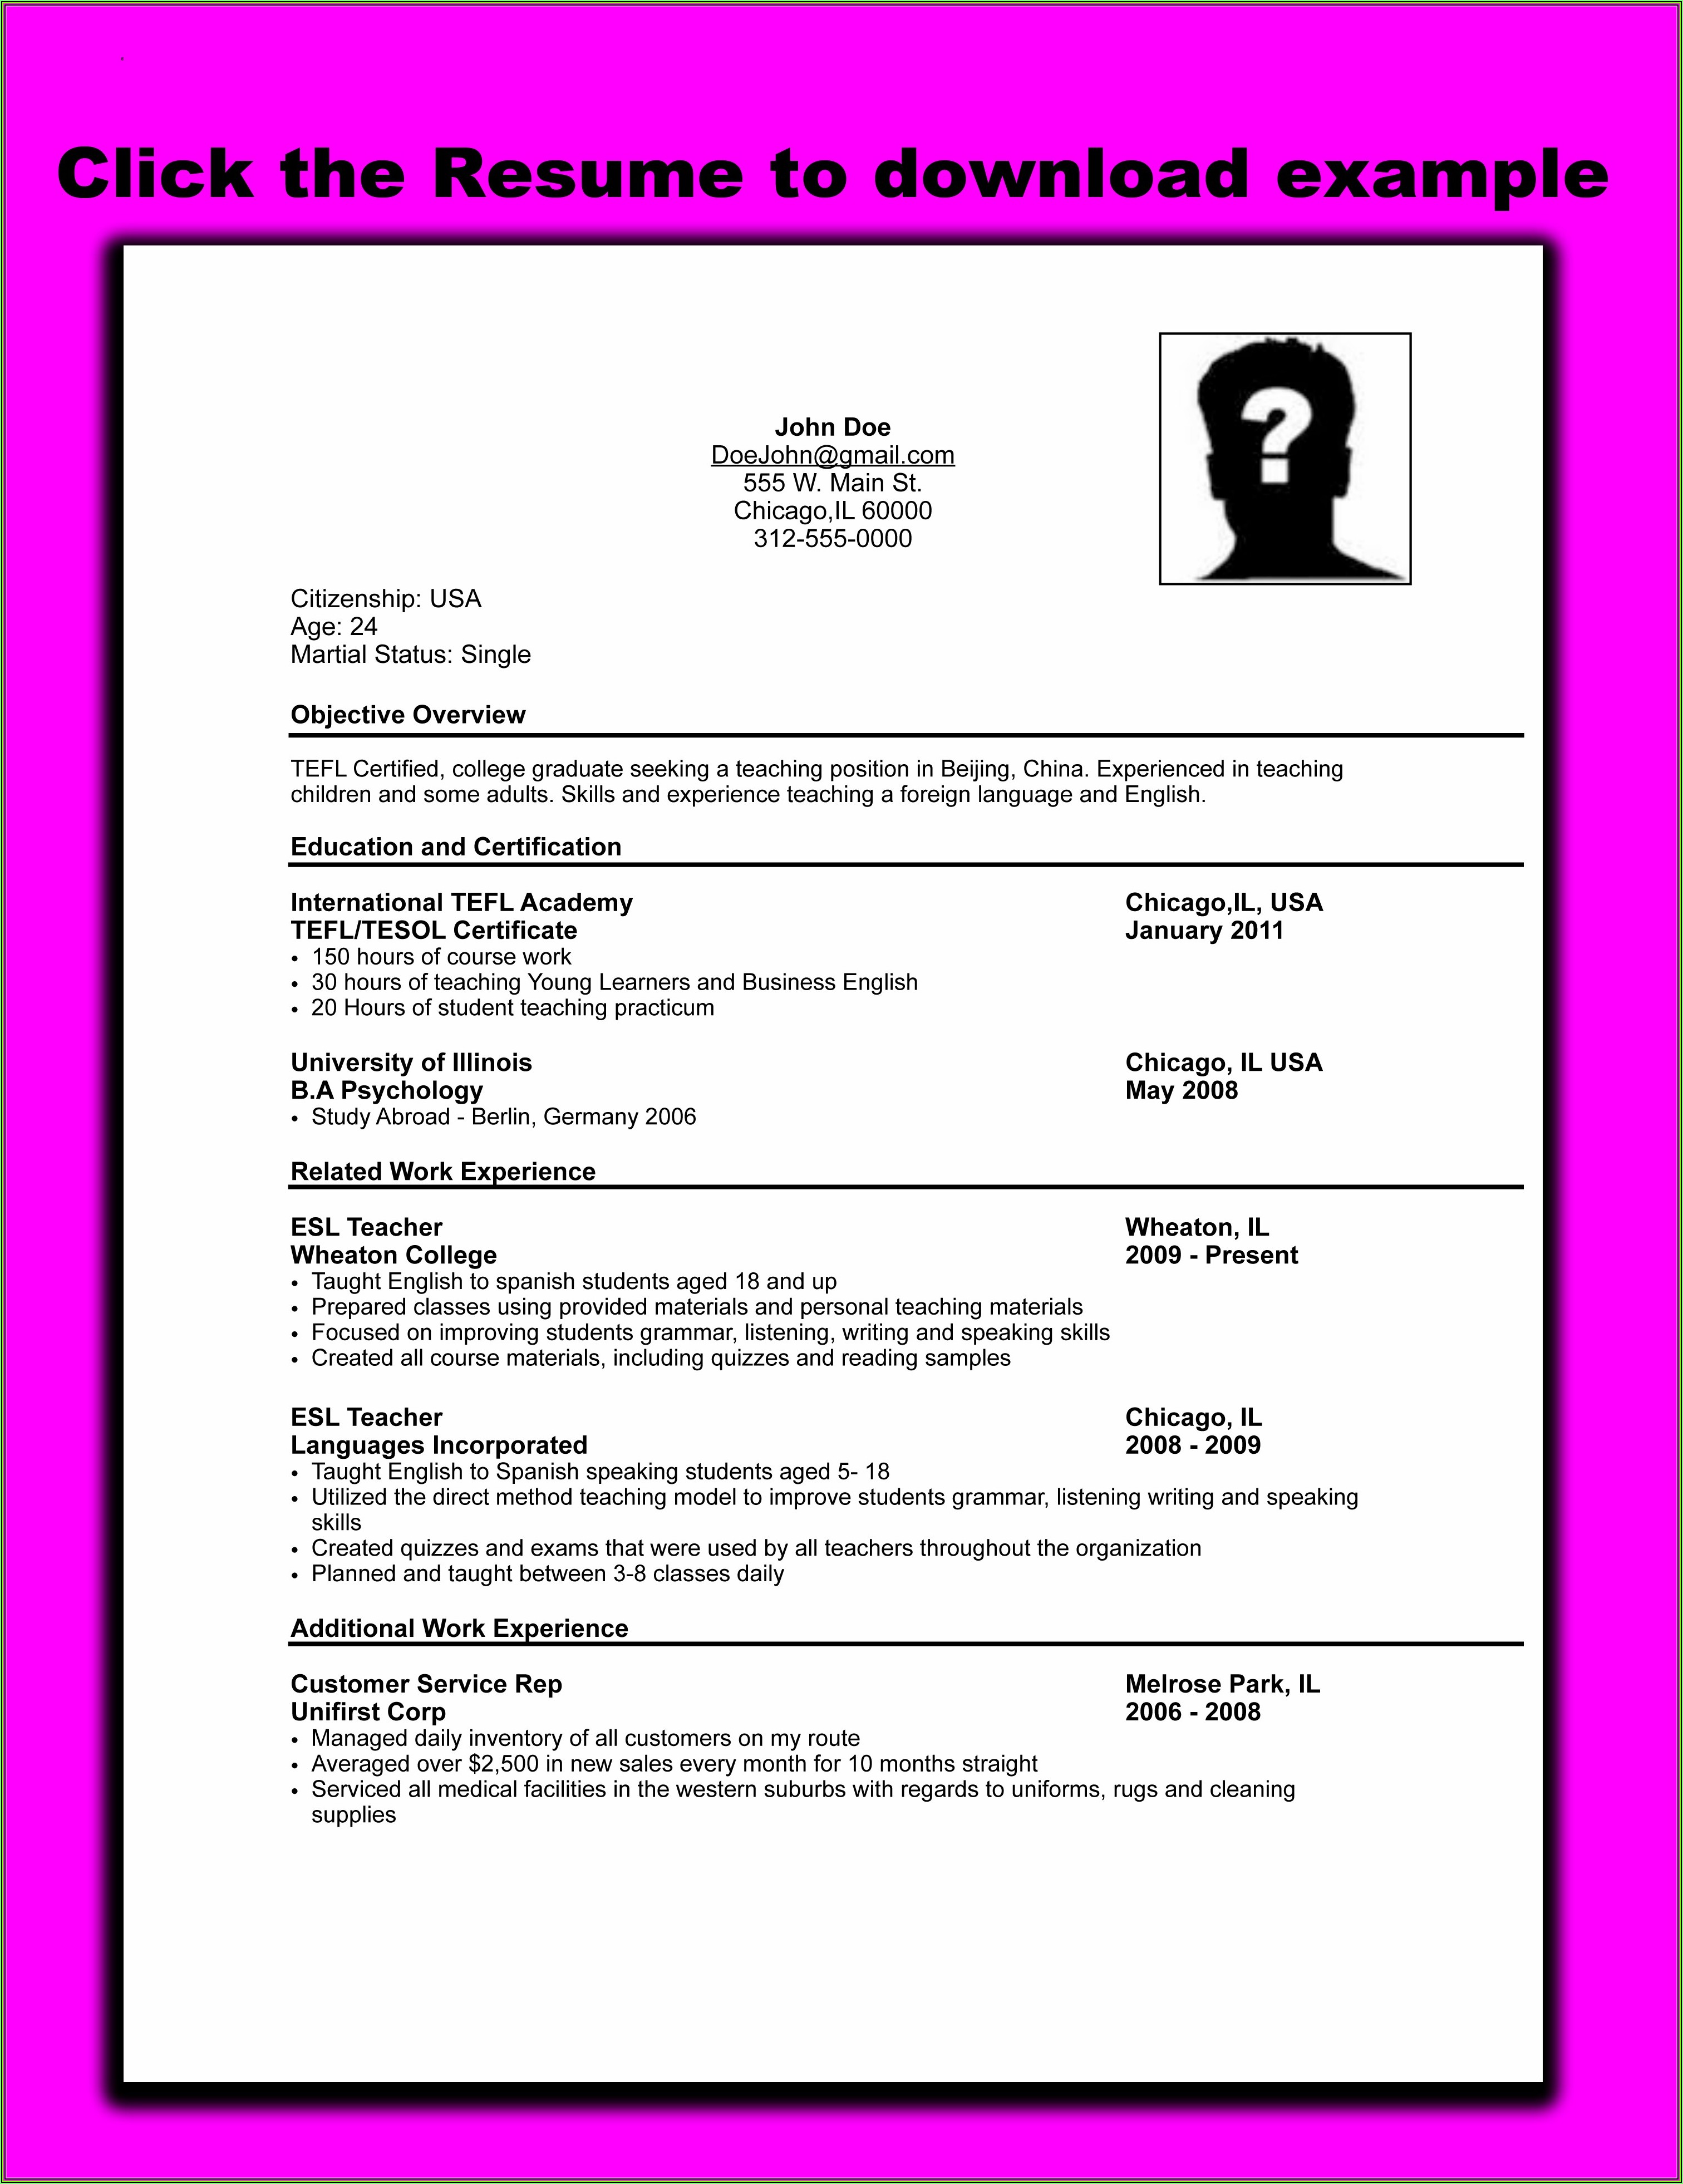 Resume Format Free Download For Lecturer Job